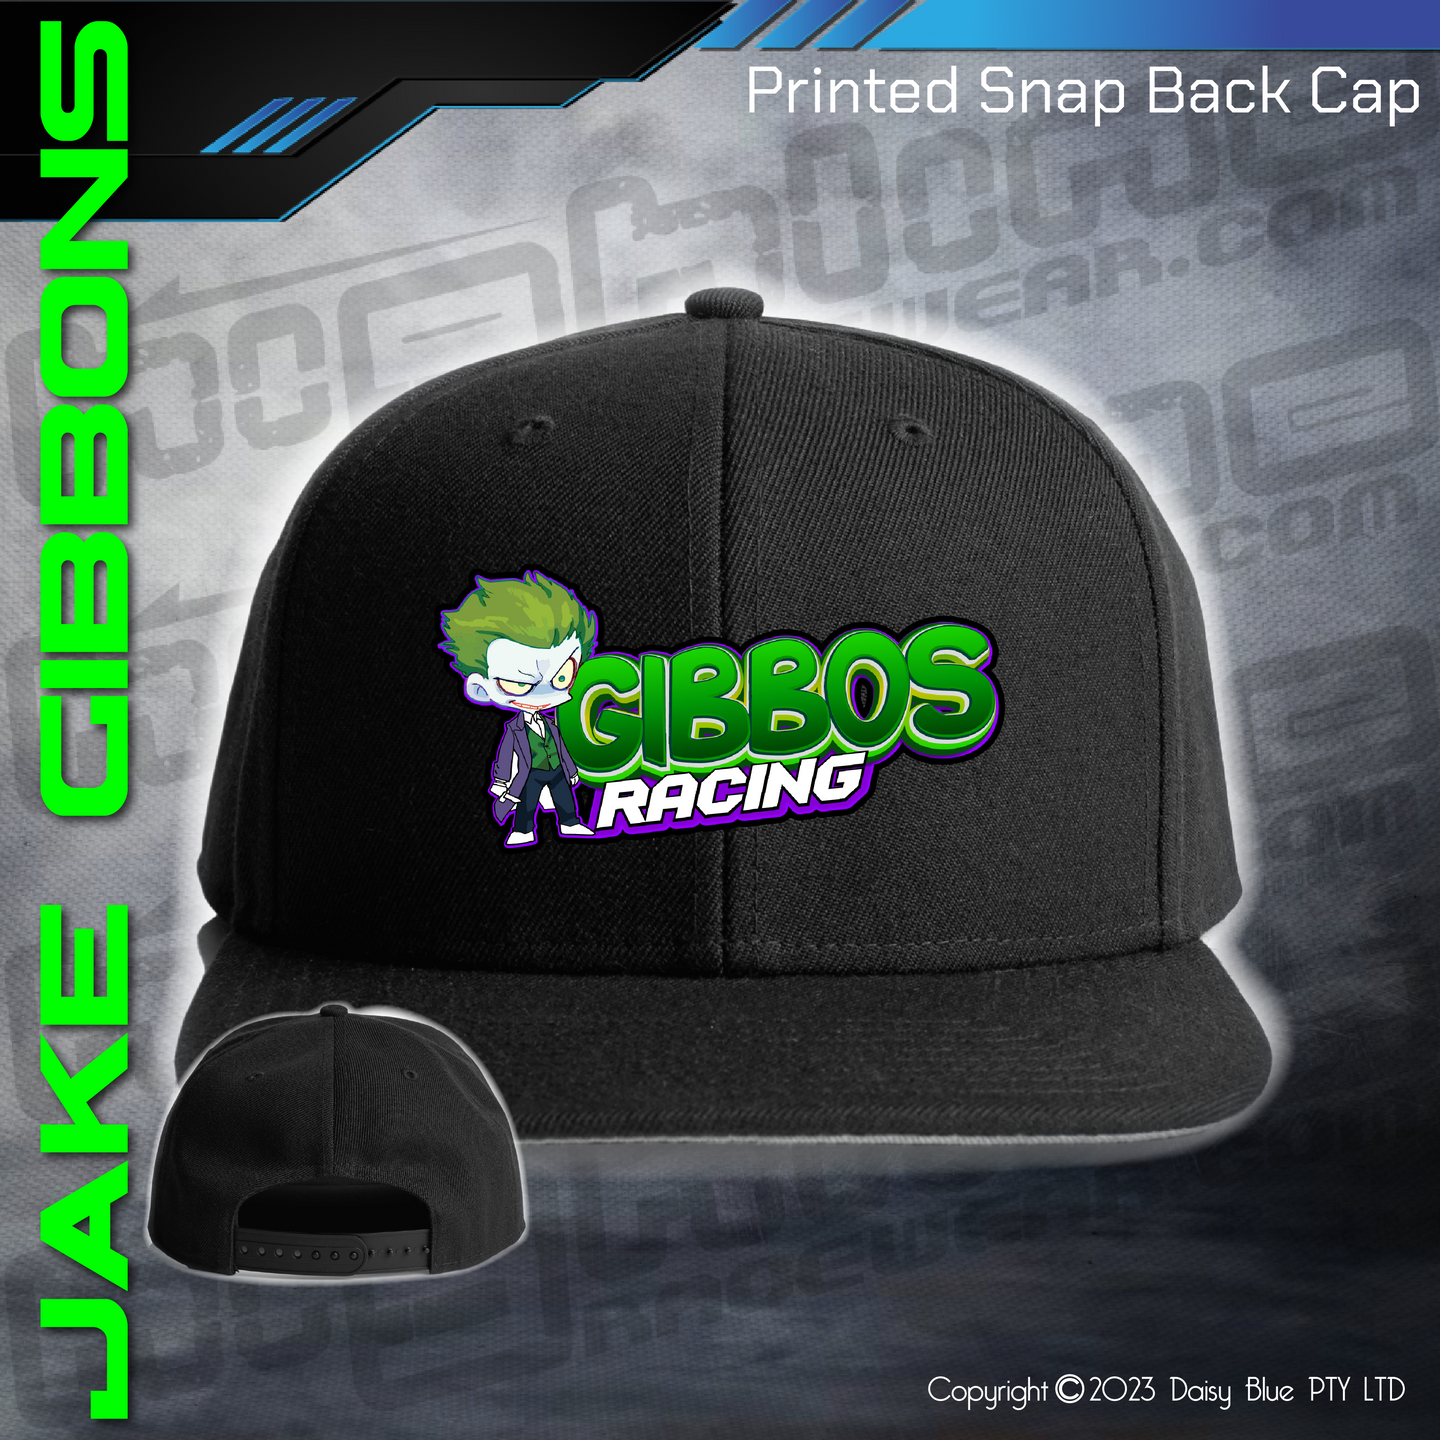 Printed Snap Back CAP - Jake Gibbons